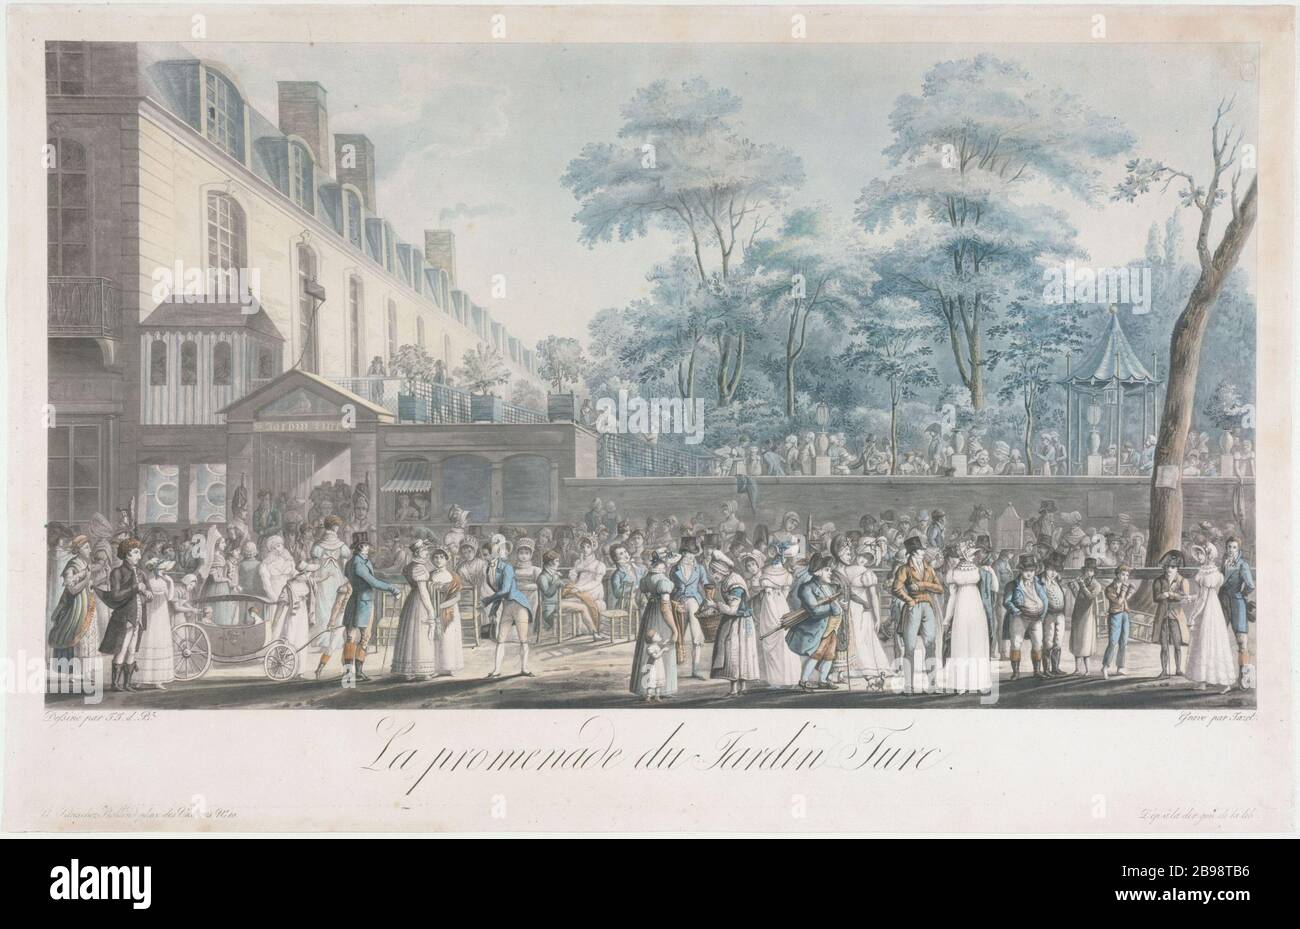 PASSEGGIATA NEL GIARDINO TURCO Jean-Pierre-Marie Jazet (1788-1871). 'La Promenade du jardin Turc' it 1812. Gravure. Parigi, musée Carnavalet. Foto Stock